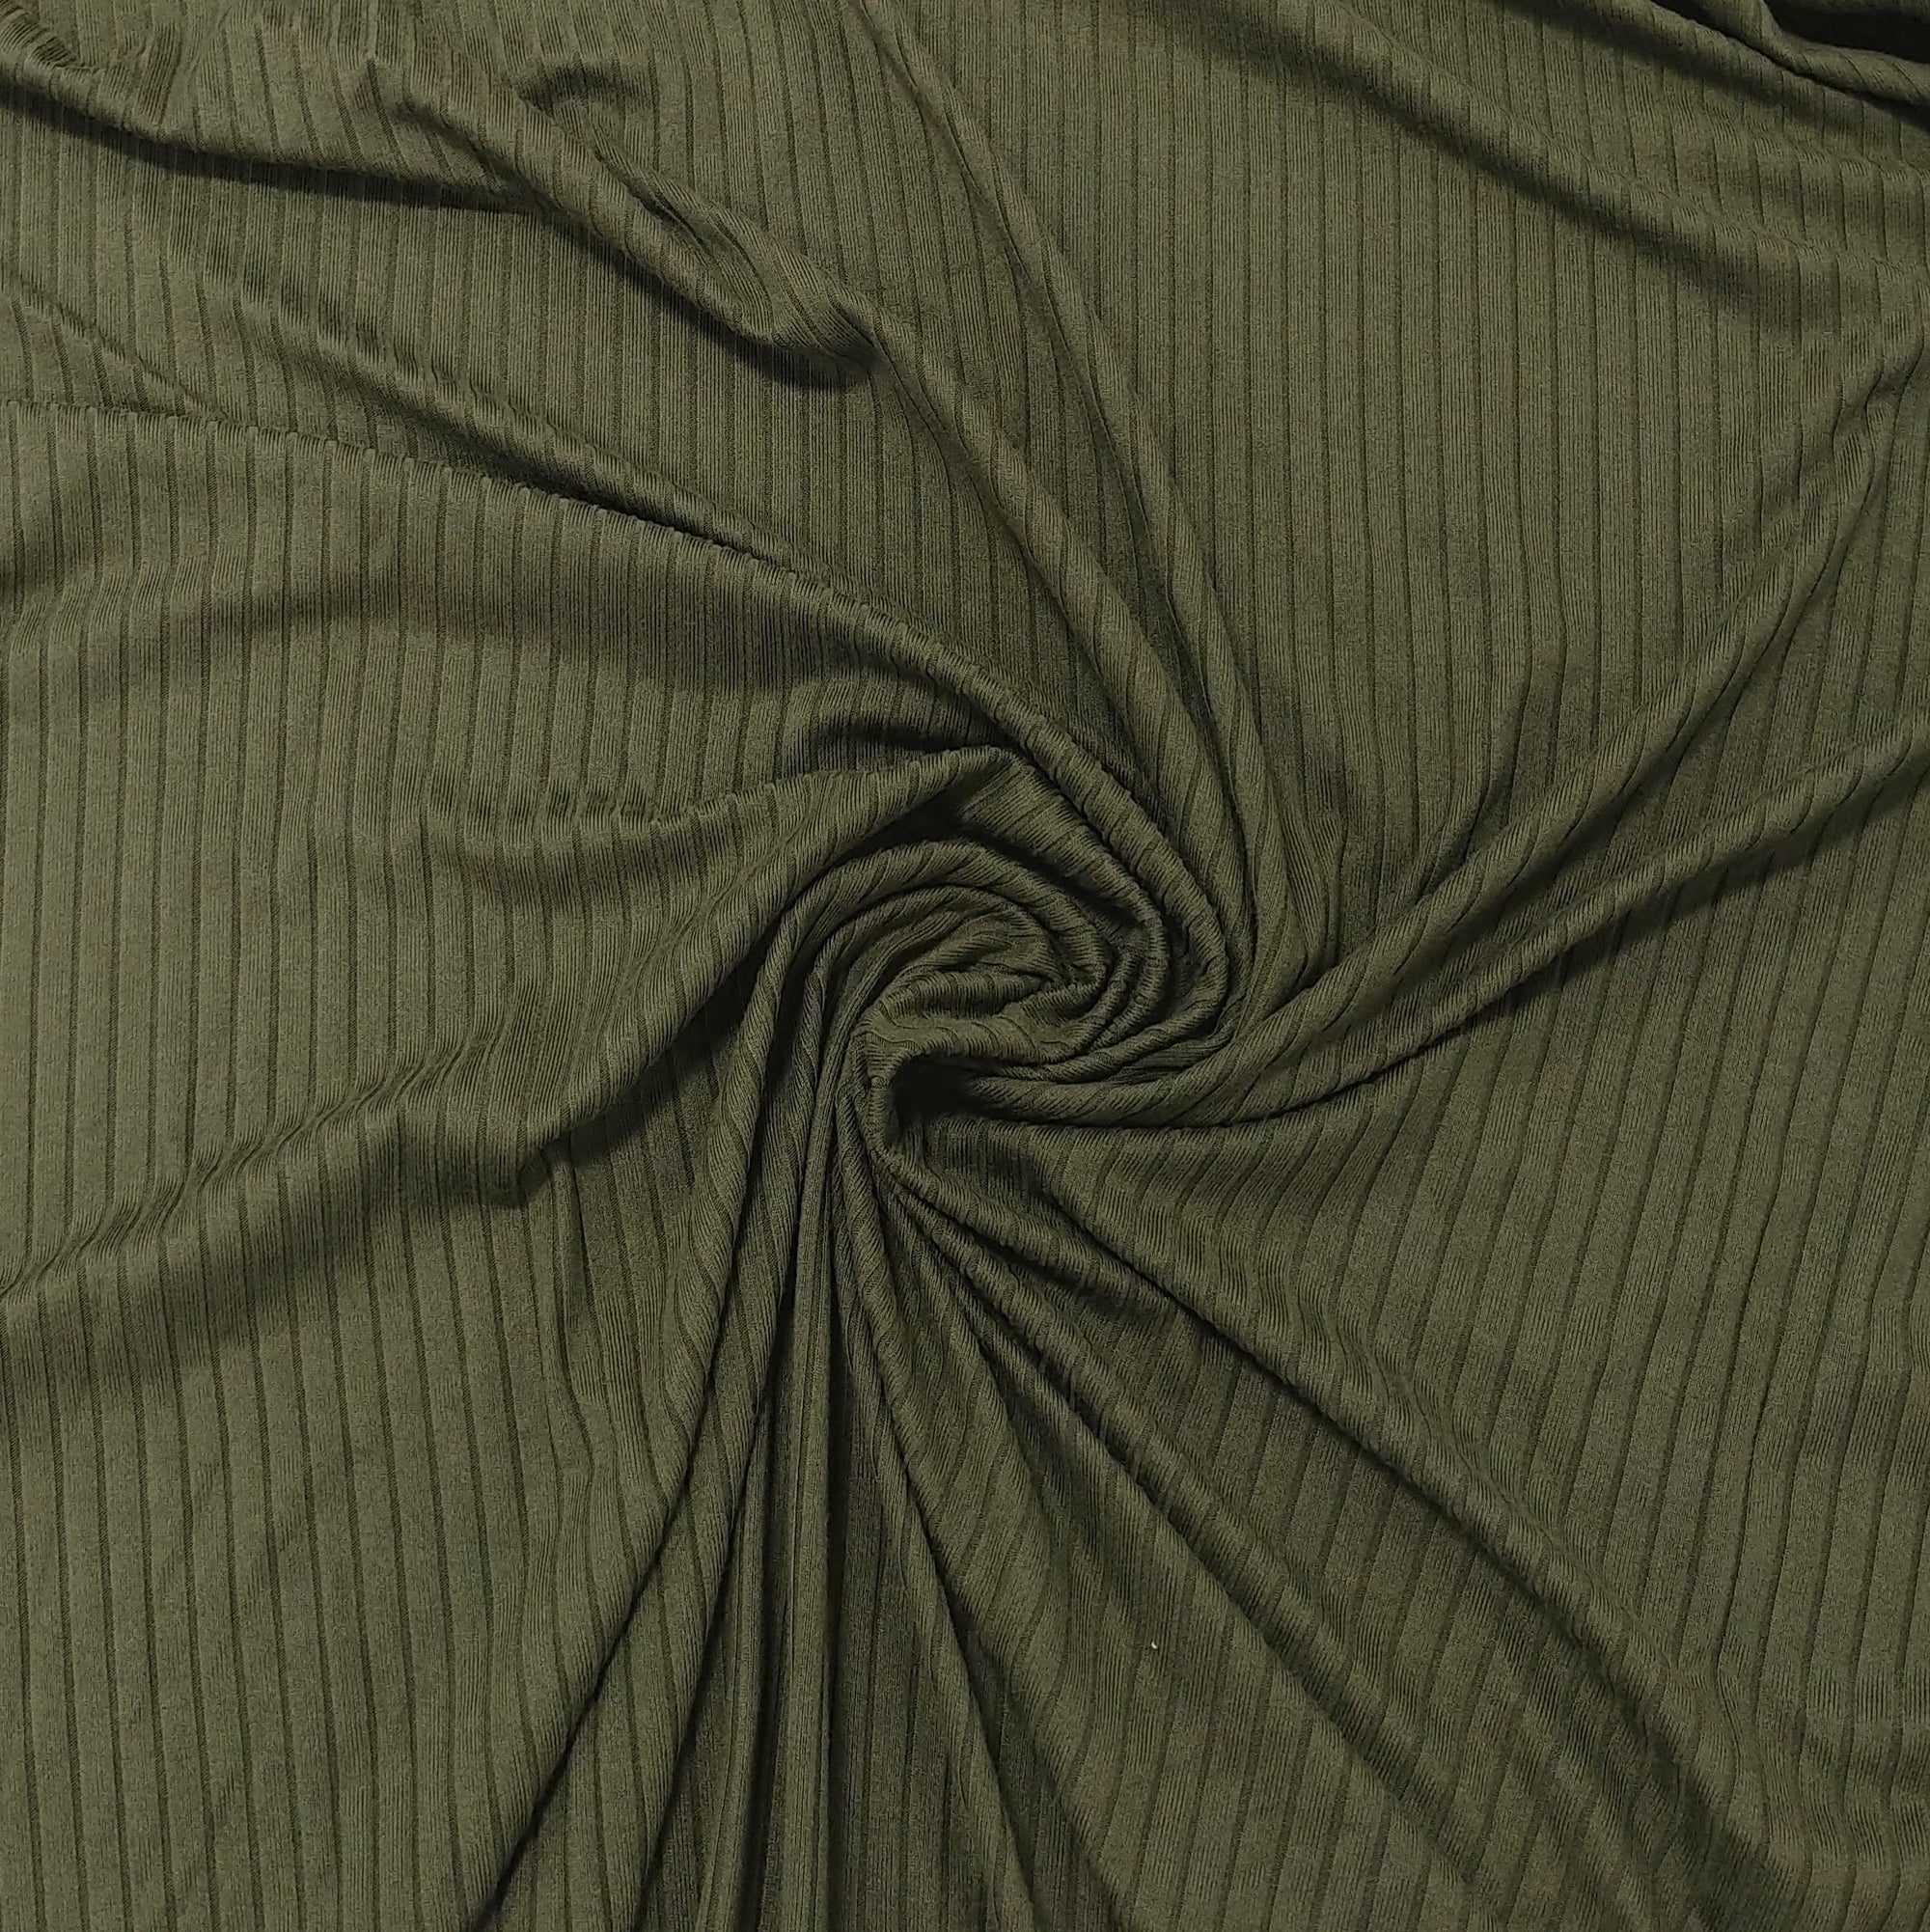 Solid Olive Green Poly Spandex 4 Way Stretch 8x3 Rib Knit Fabric, Raspberry Creek Fabrics, watermarked, restored